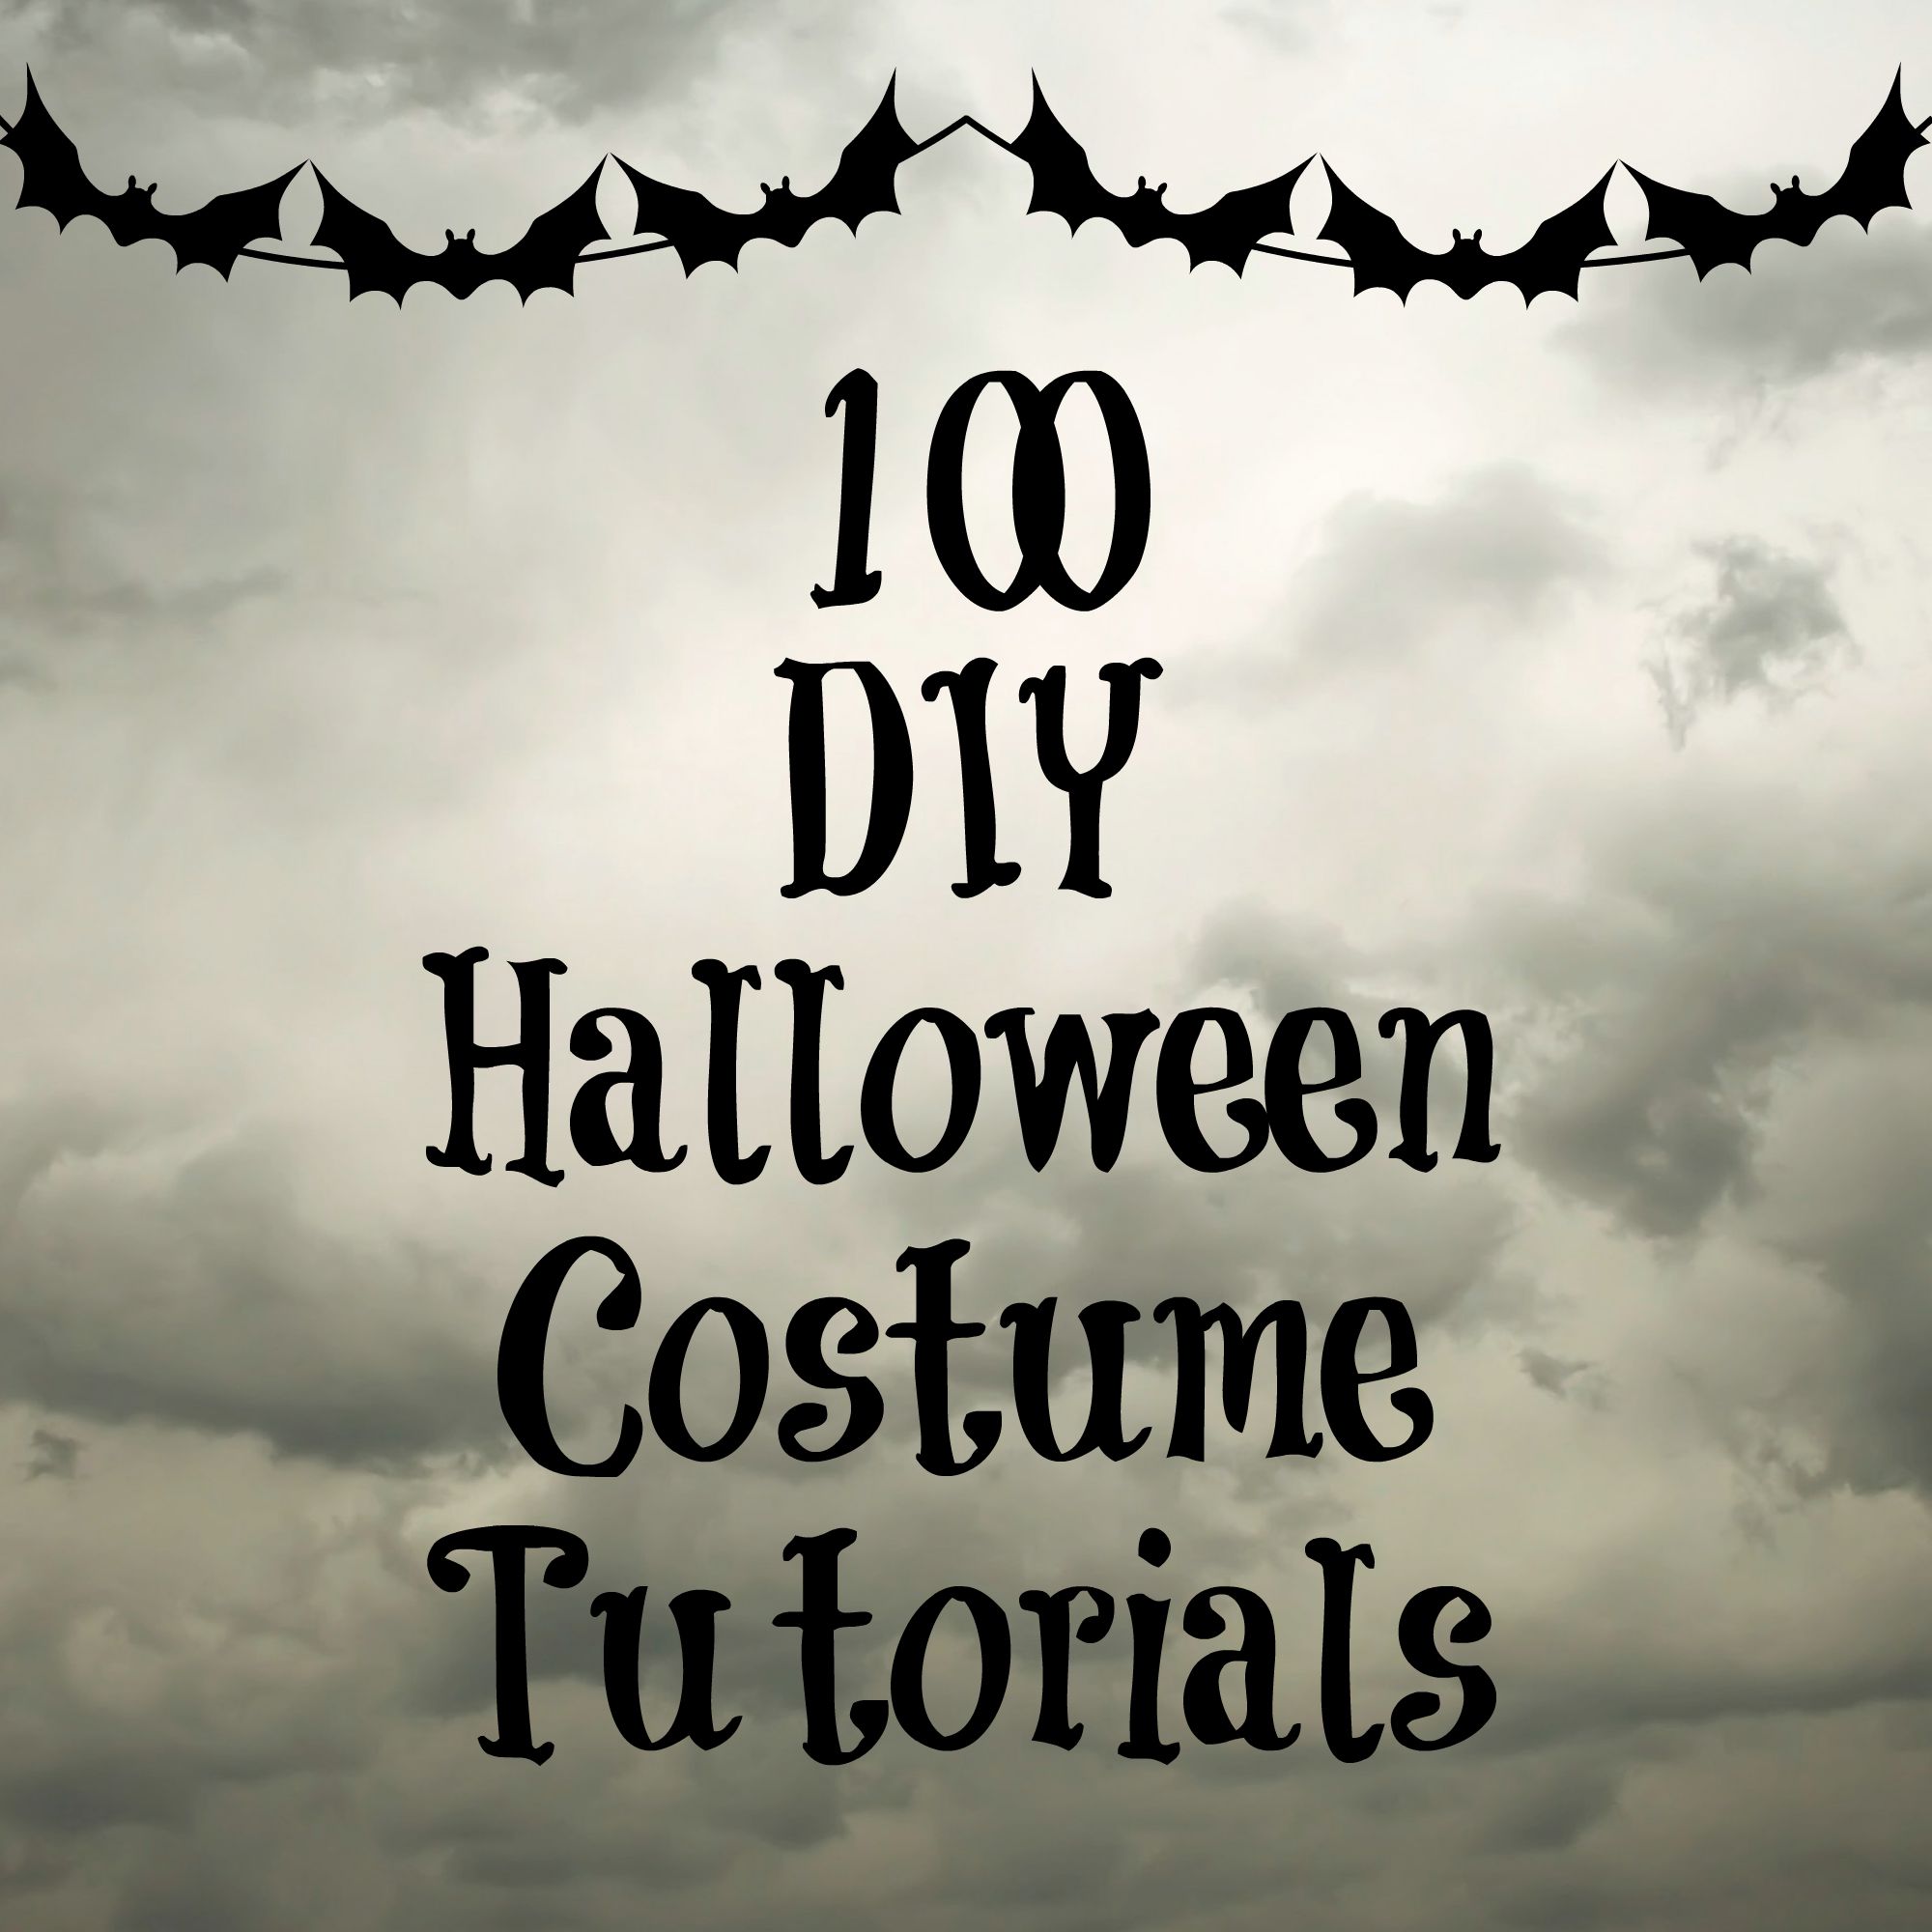 https://yesterdayontuesday.com/wp-content/uploads/2015/09/100-DIY-Halloween-Costume-Tutorials.jpg